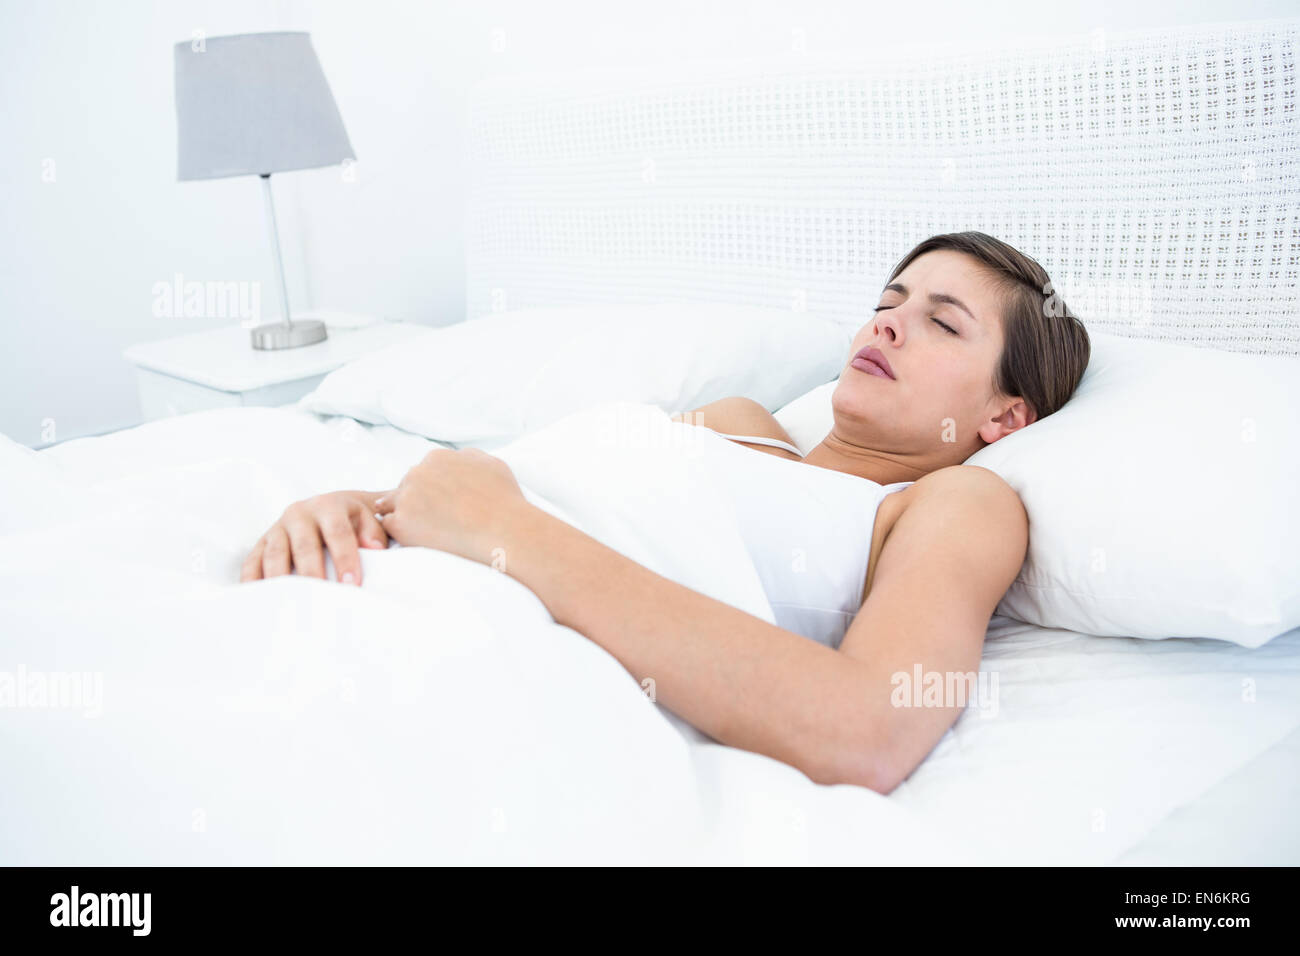 Lifestyle Portrait Brunette Girl Underwear Sleeping Beautiful Woman Bed  Stock Photo by ©EugenePartyzan 363376014